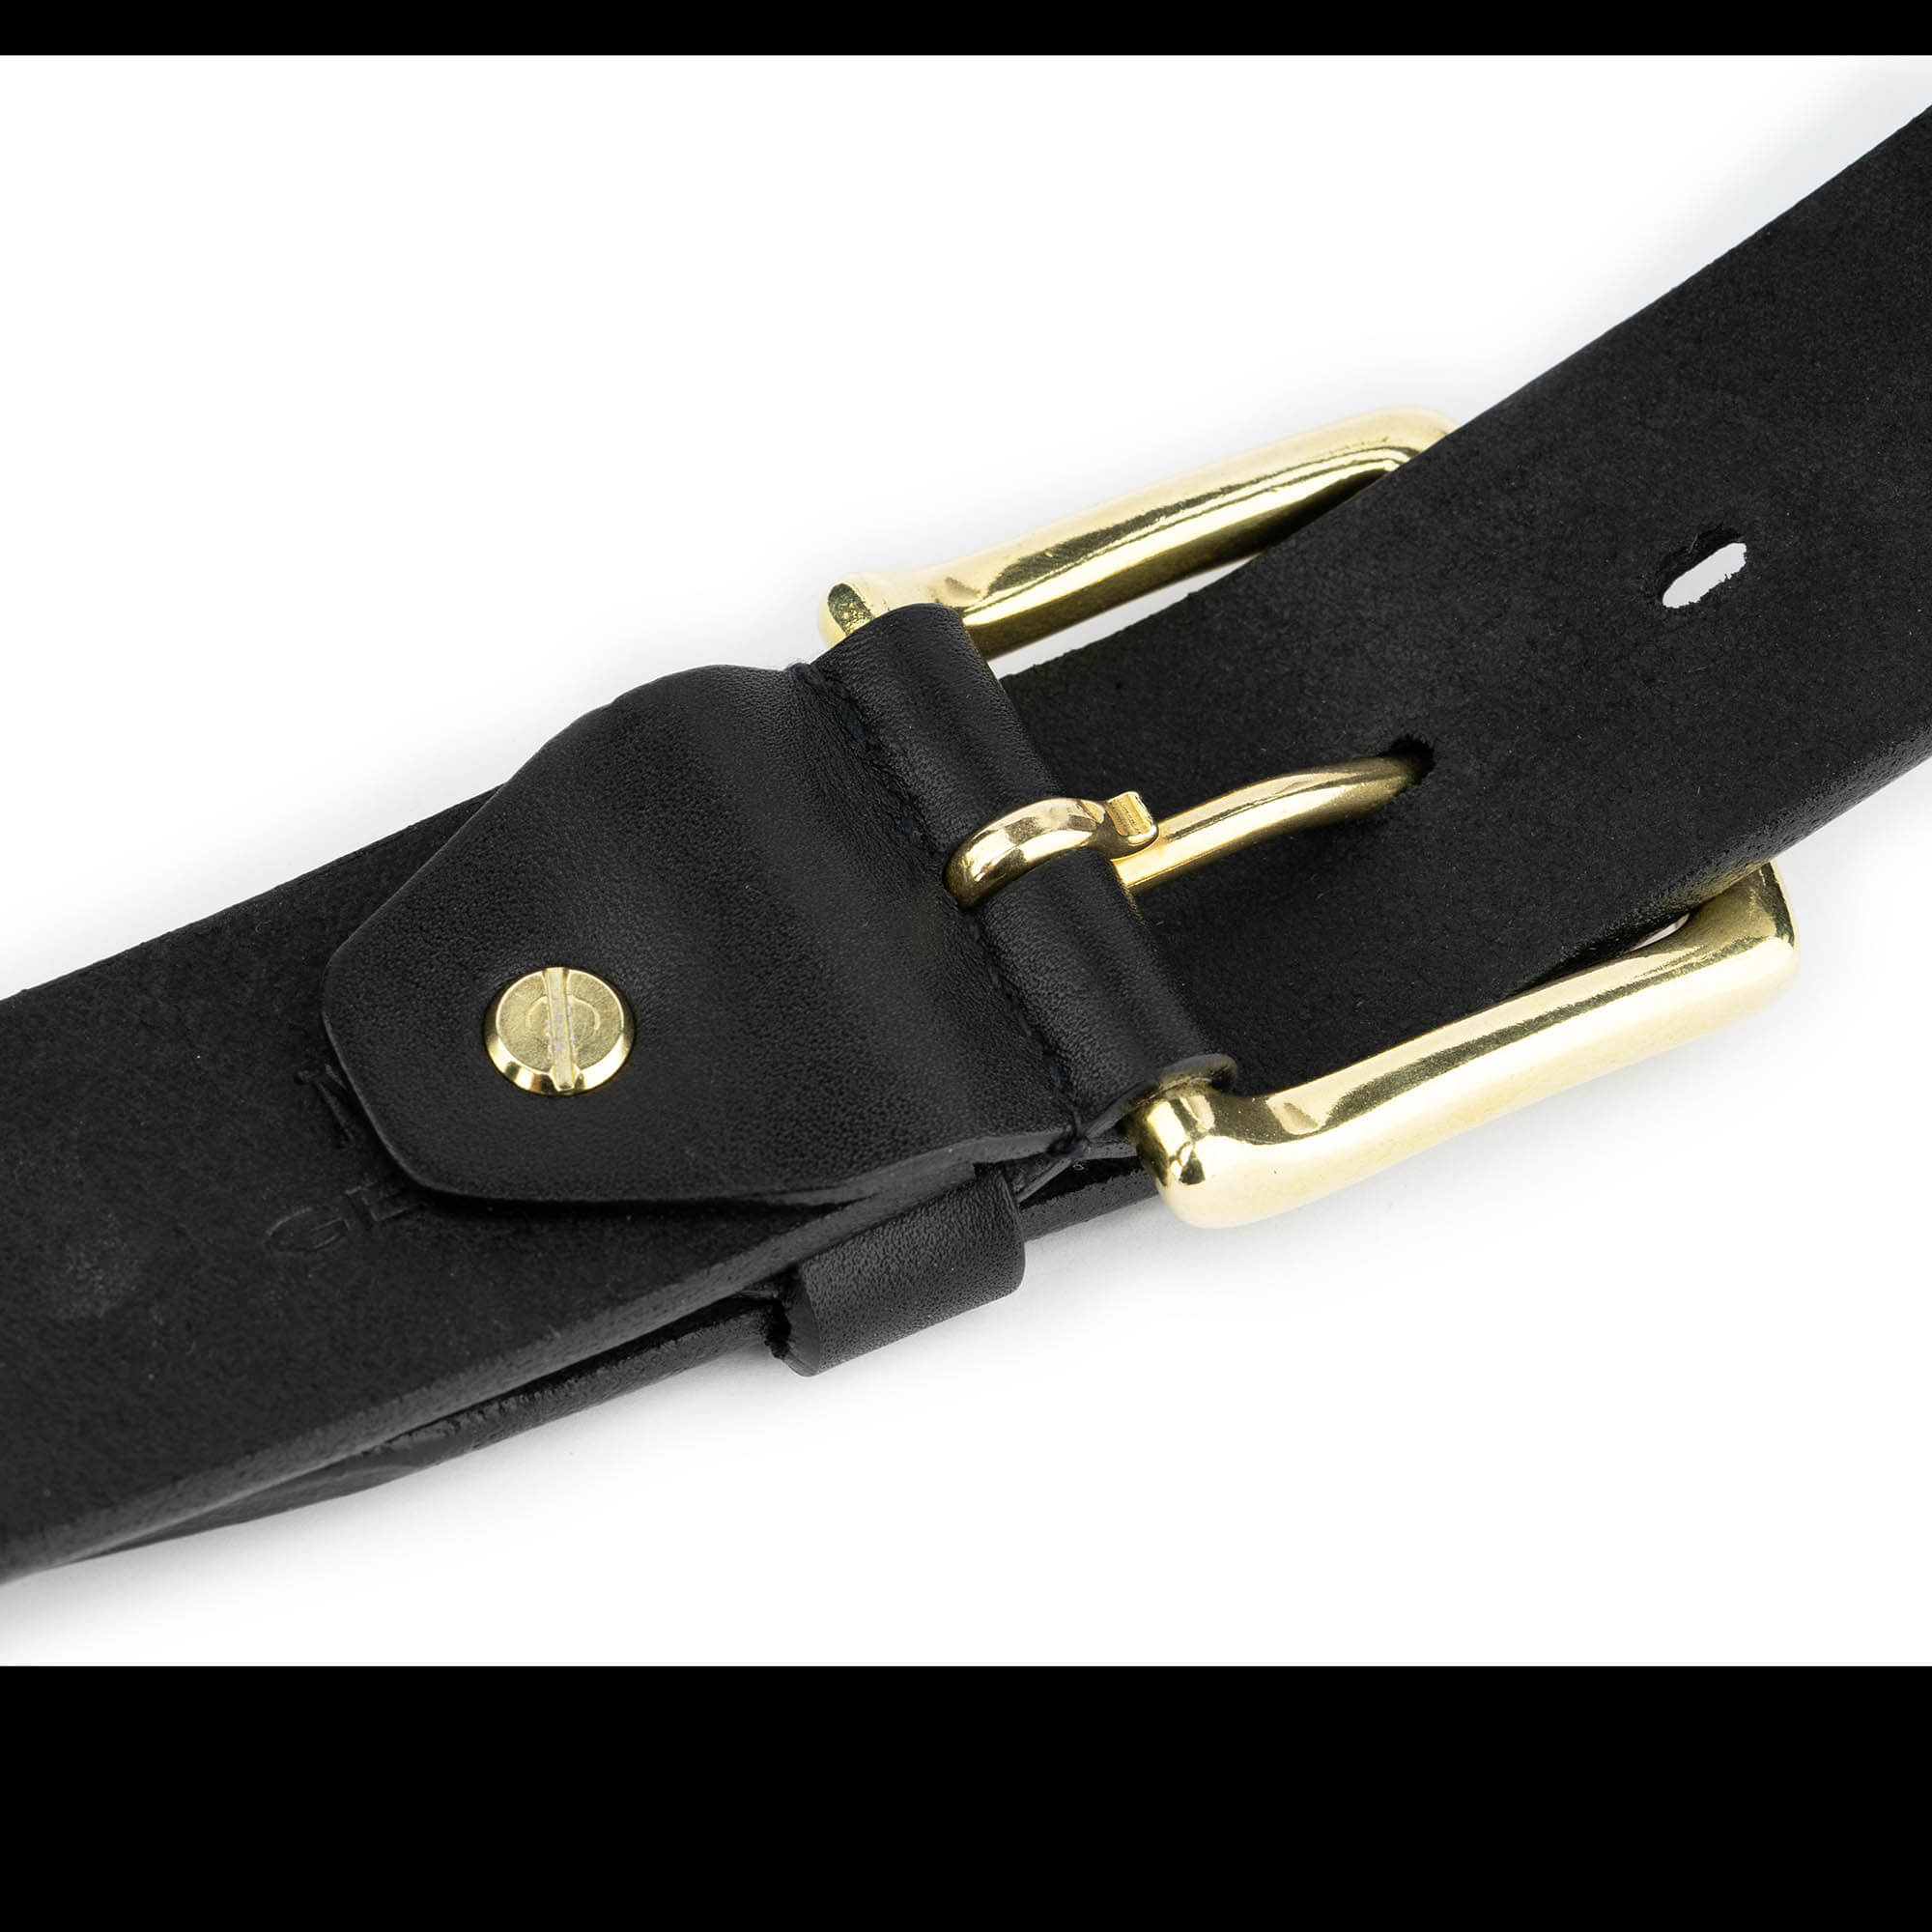 Capo Pelle Men's Reversible Patent Belt